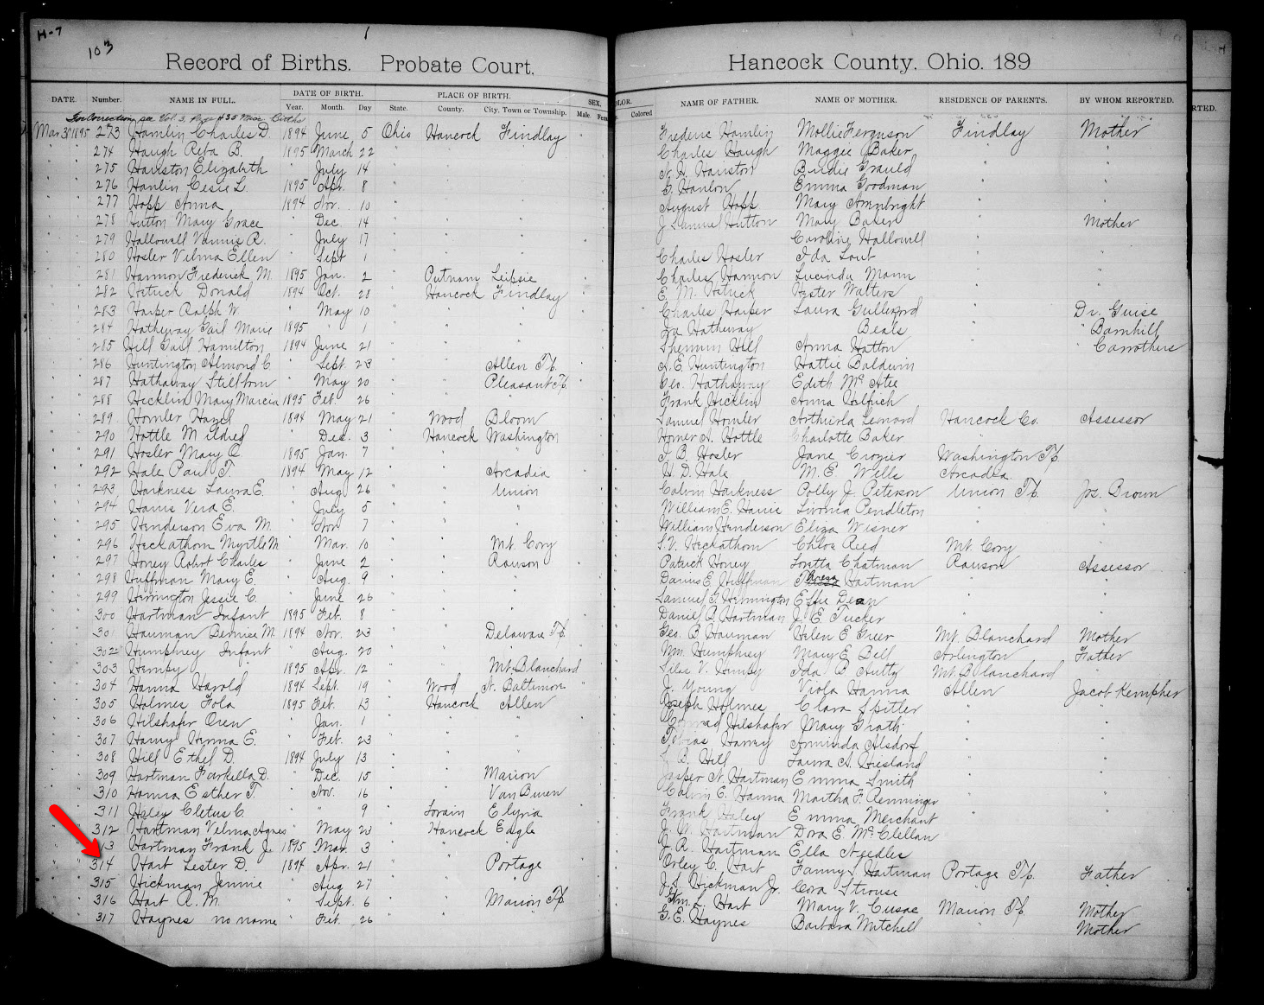 Climbing My Family Tree: Birth Record of Lester Dene Hart (21 April 1894)